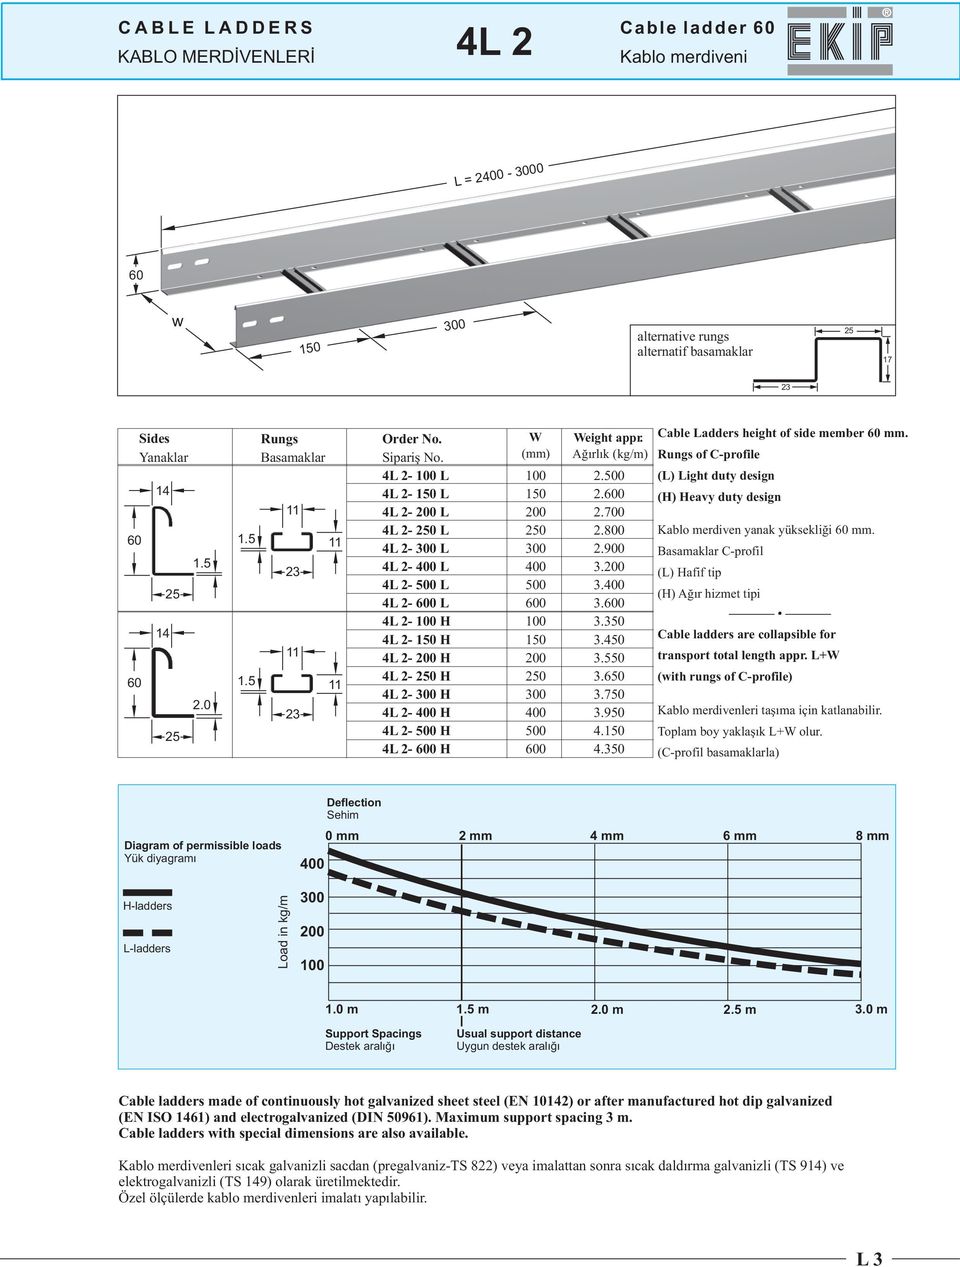 800 2.00 3. 3. 3.0 3.3 3.4 3.5 3.6 3.7 3. 4.1 4.3 Cble Ldders eigt of side member mm. Rungs of C-profile (L) Ligt duty design (H) Hevy duty design Kblo merdiven ynk yüksekliği mm.